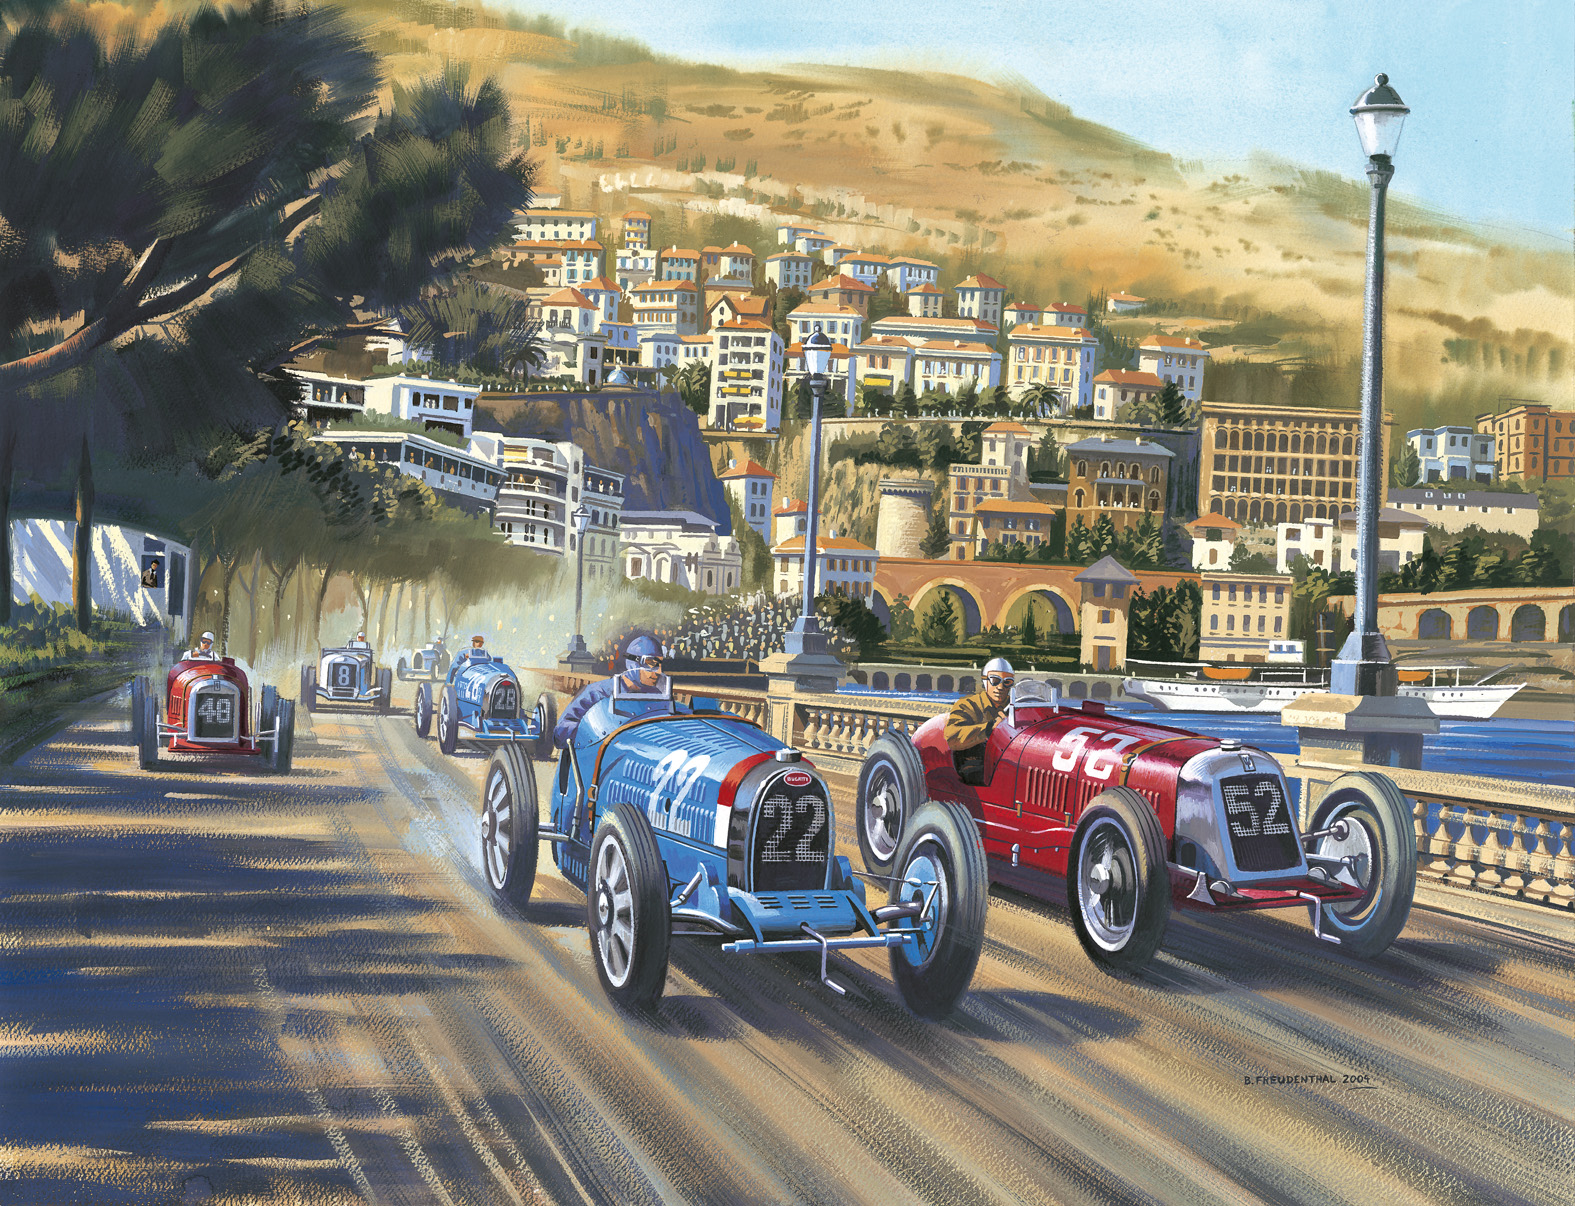 Grand Prix France Bugatti Allemagne Italie Maseratti Kunstdruck Plakatwelt 067 